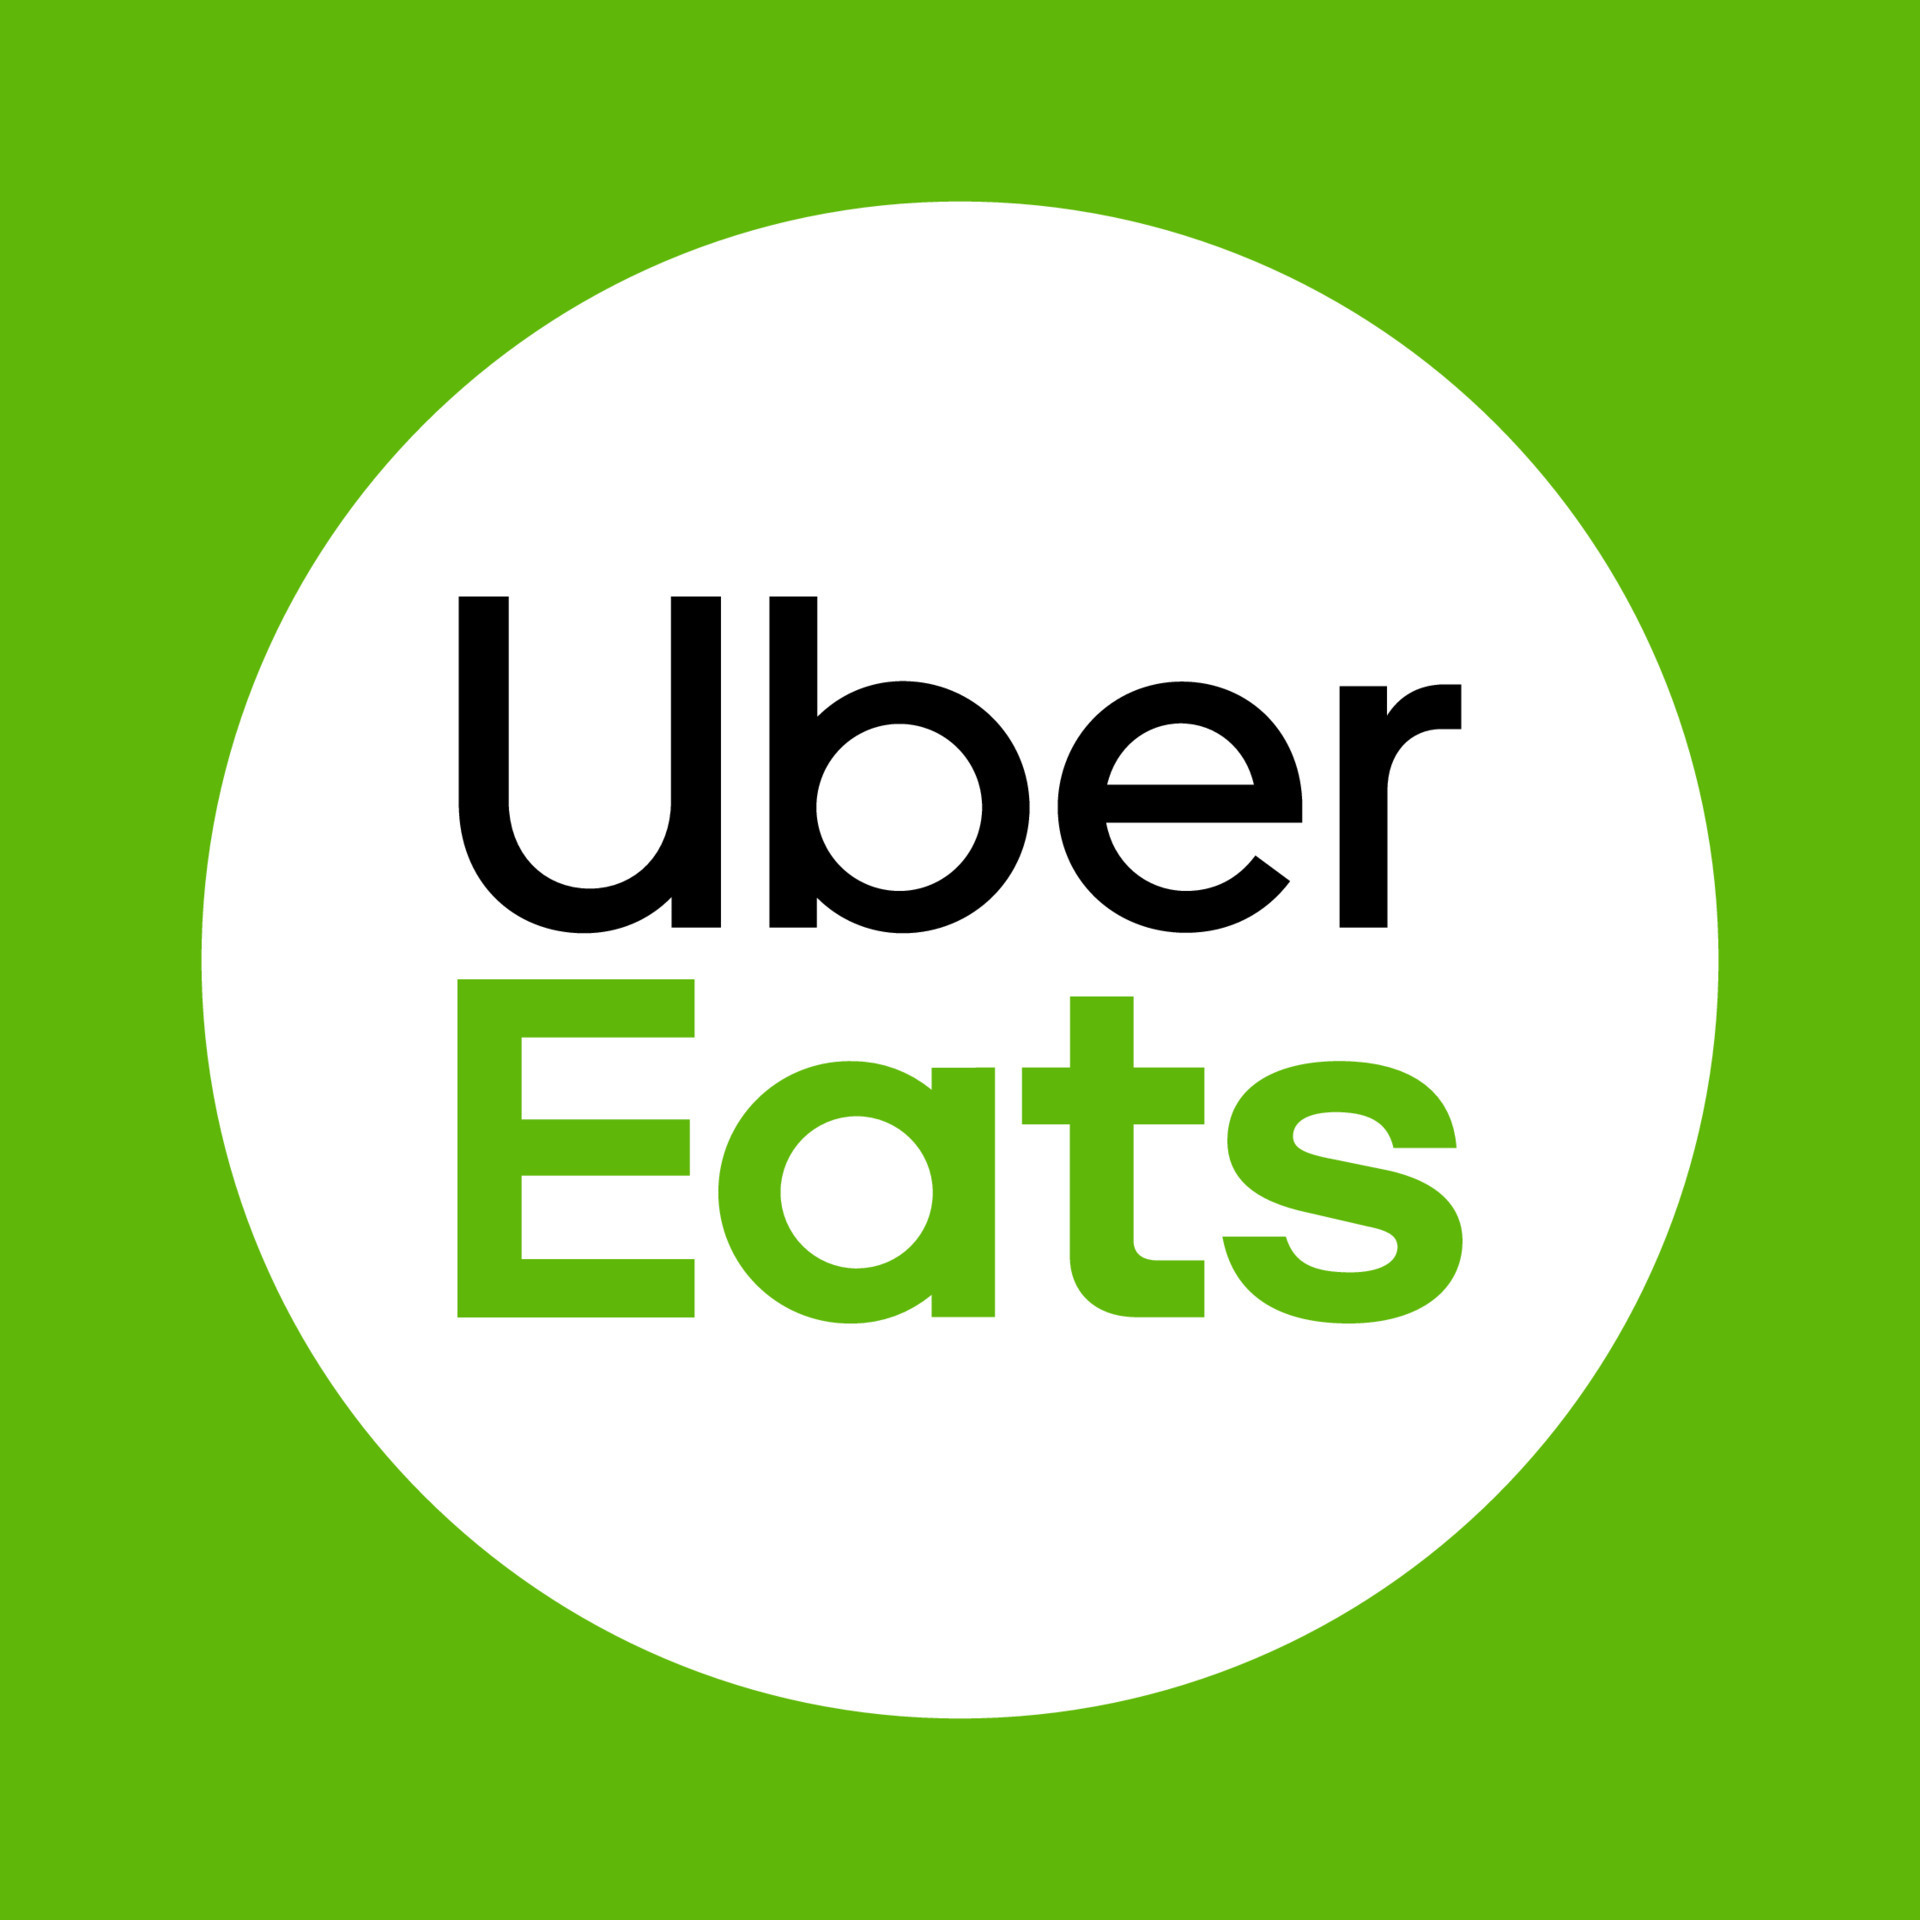 uber-eats-logo-on-green-background-editorial-logo-vector-18970107